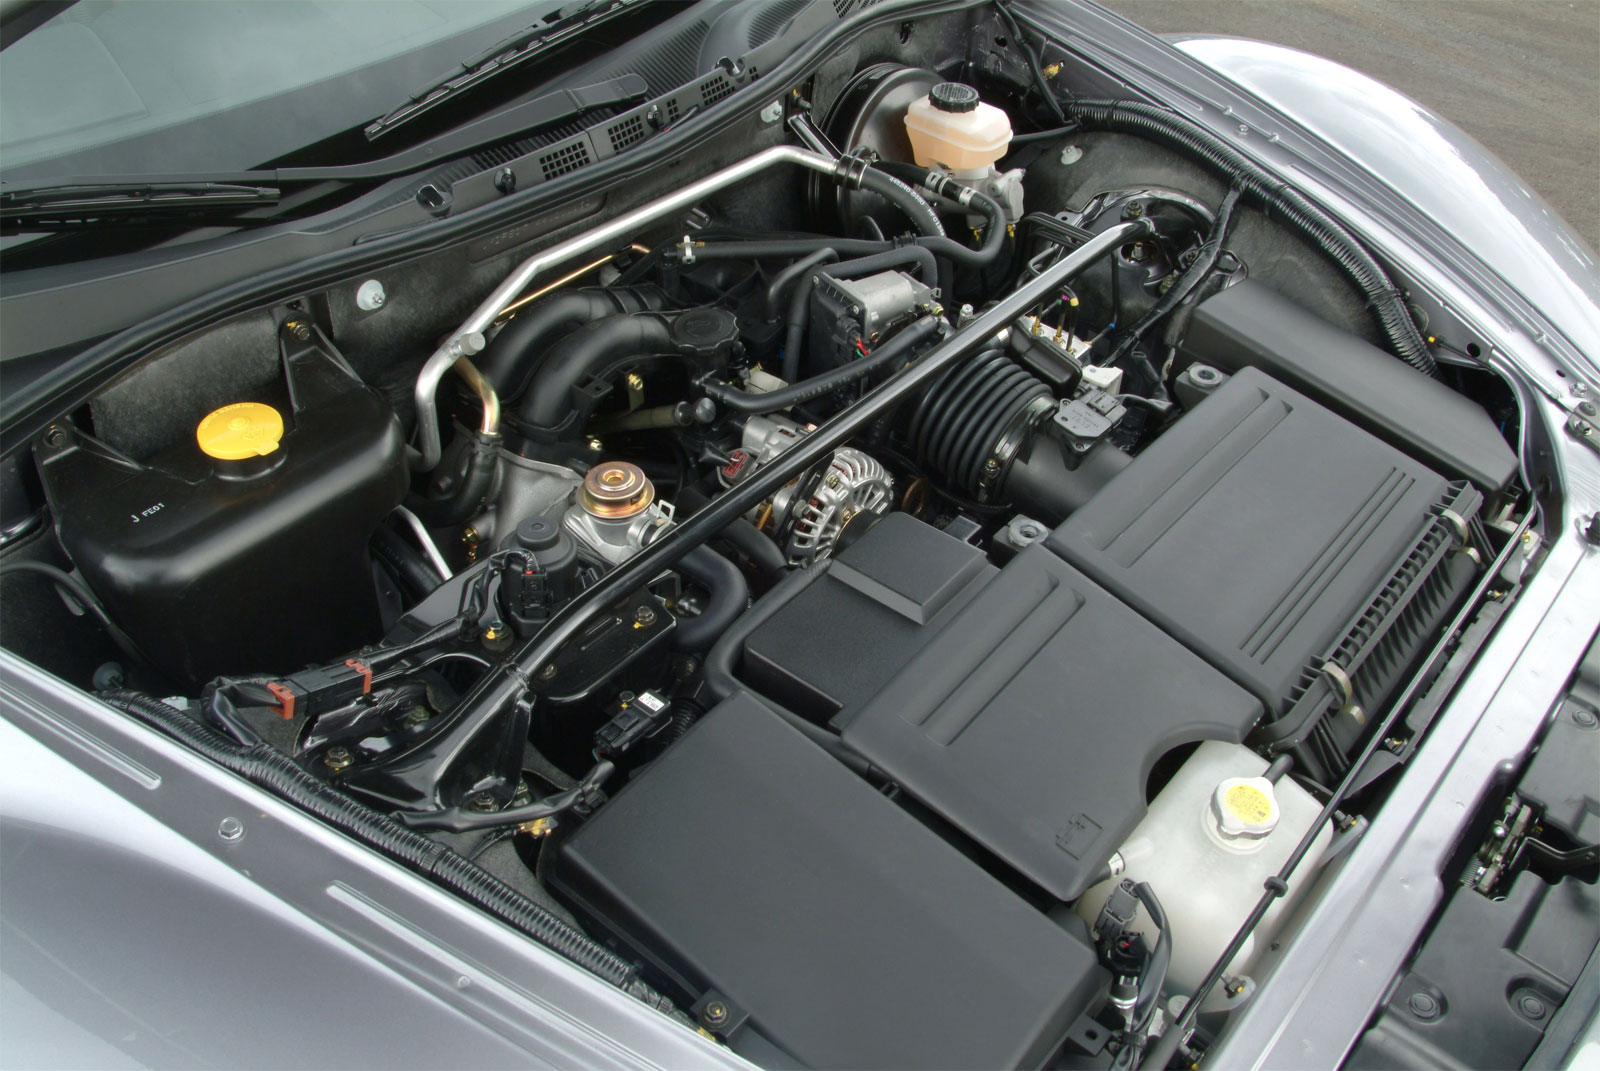 
Image Moteur - Mazda RX-8 (2007)
 